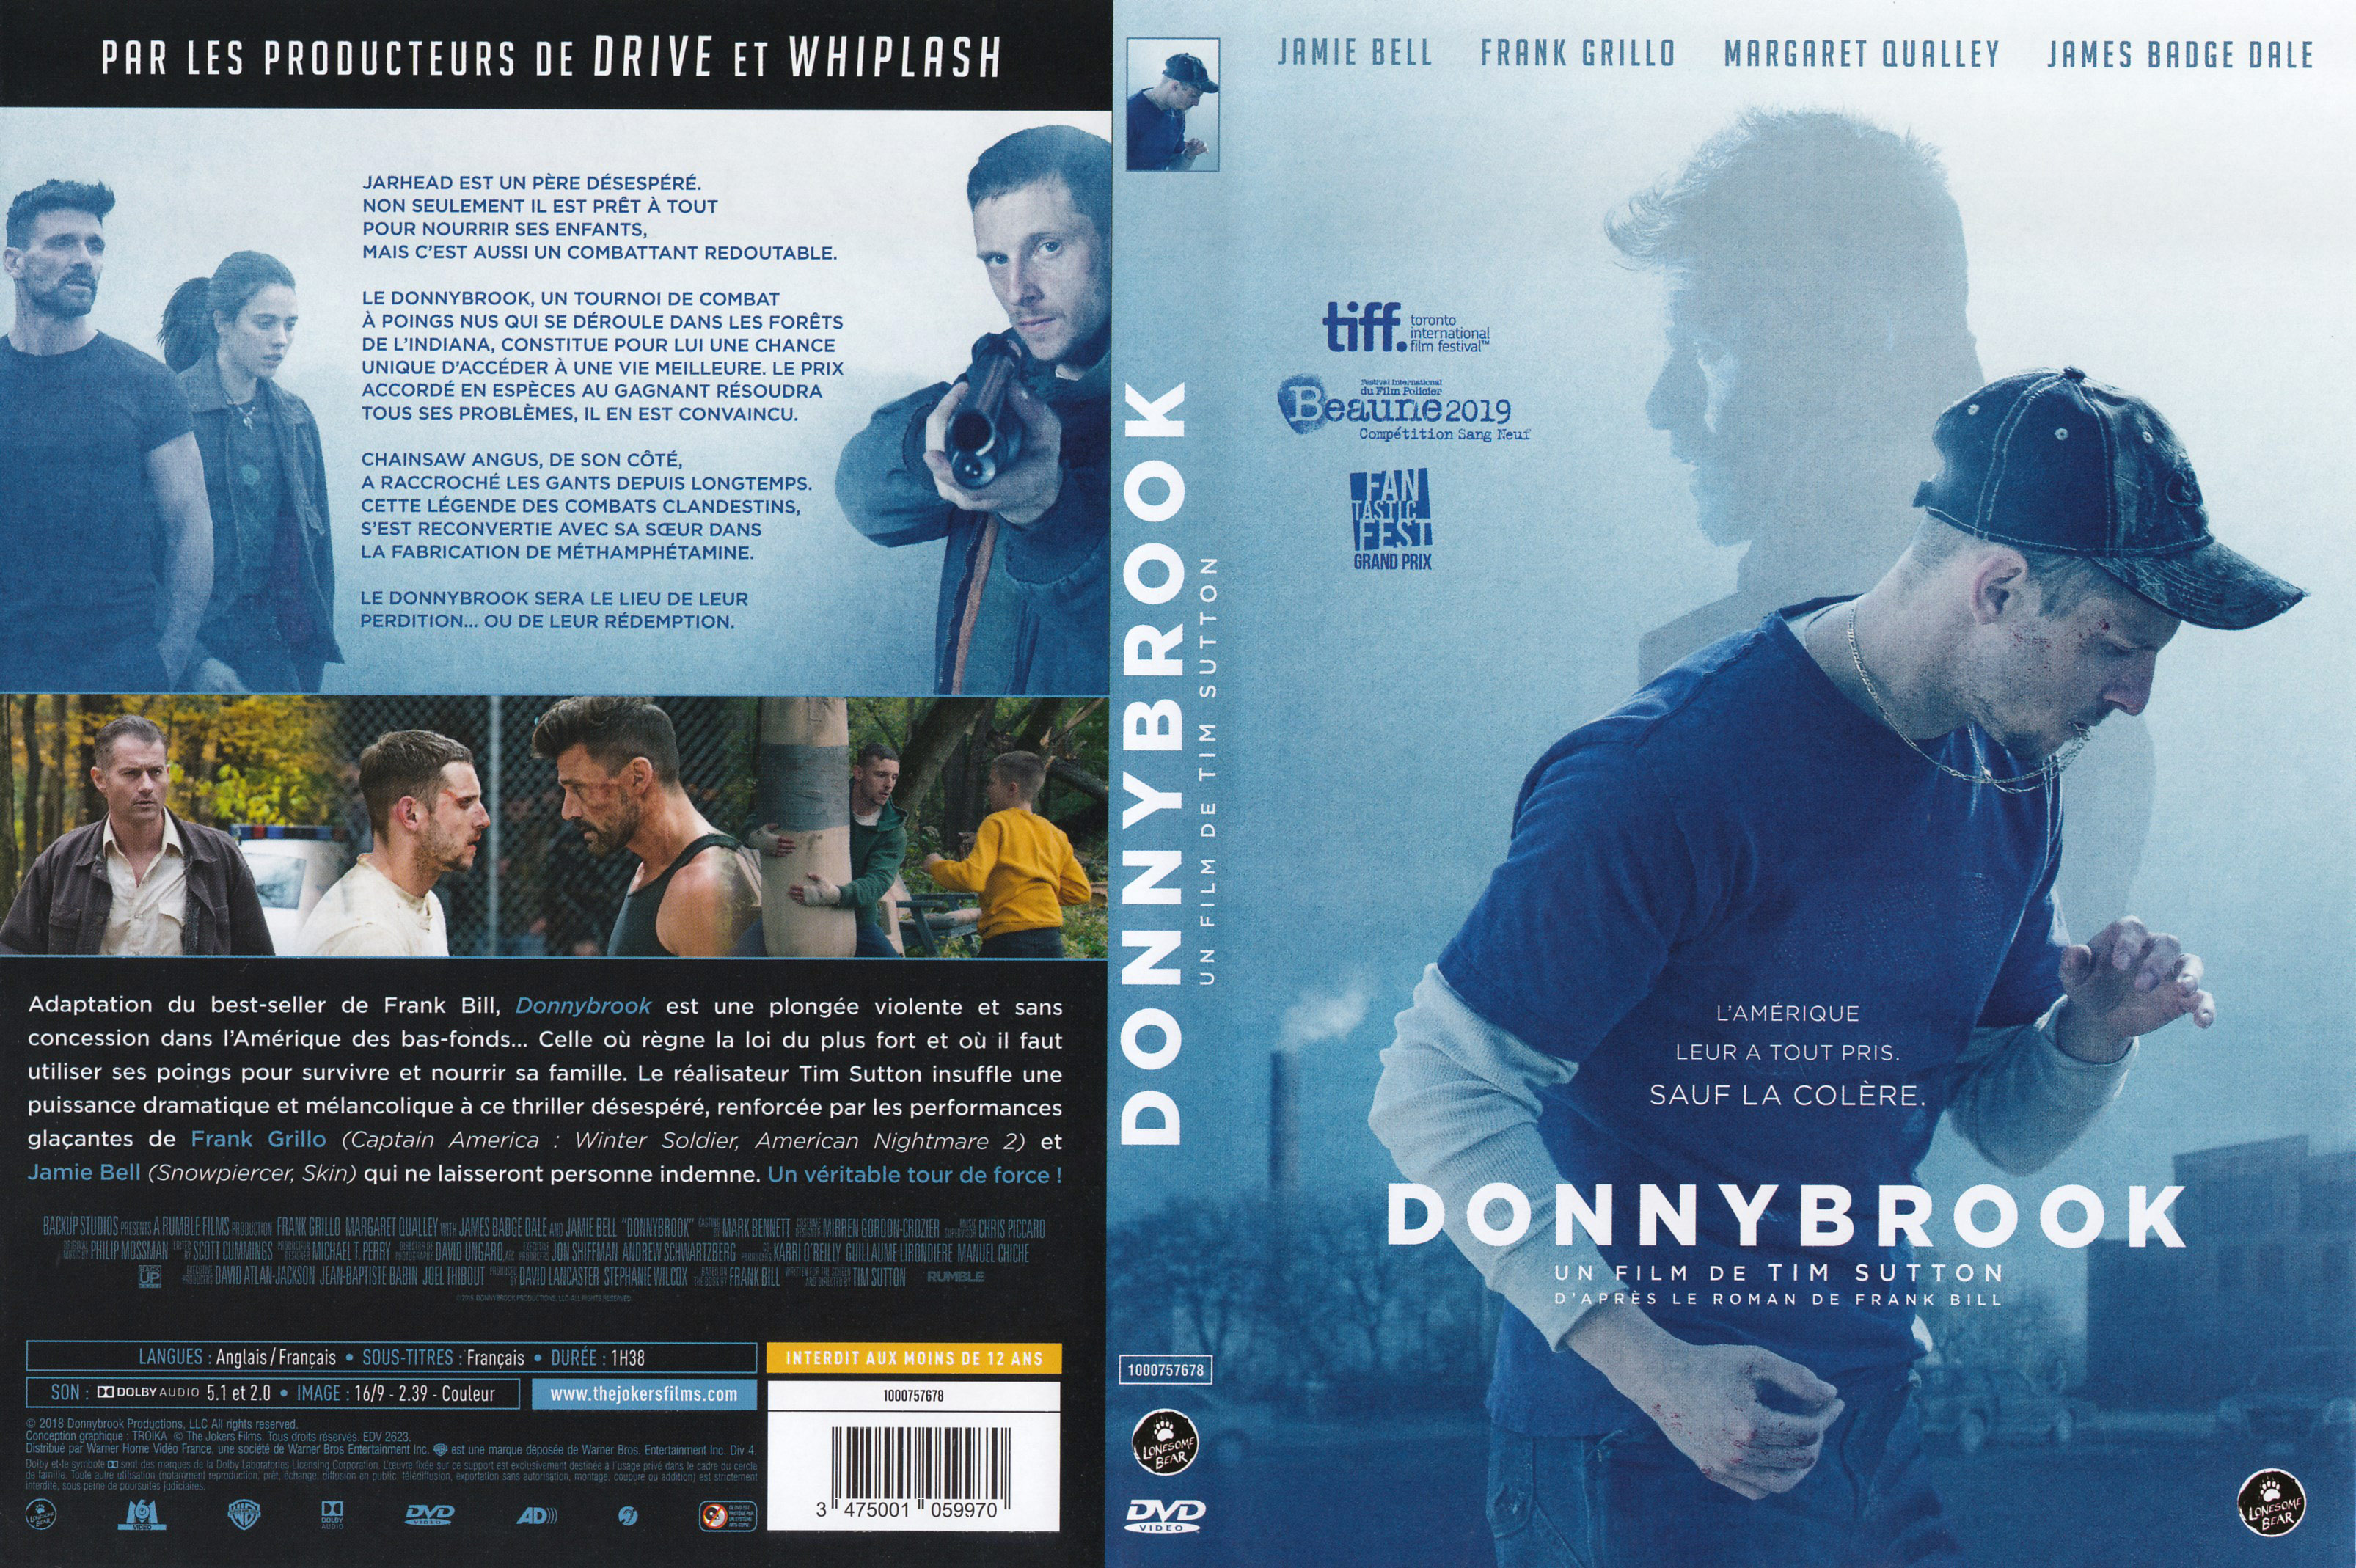 Jaquette DVD Donnybrook